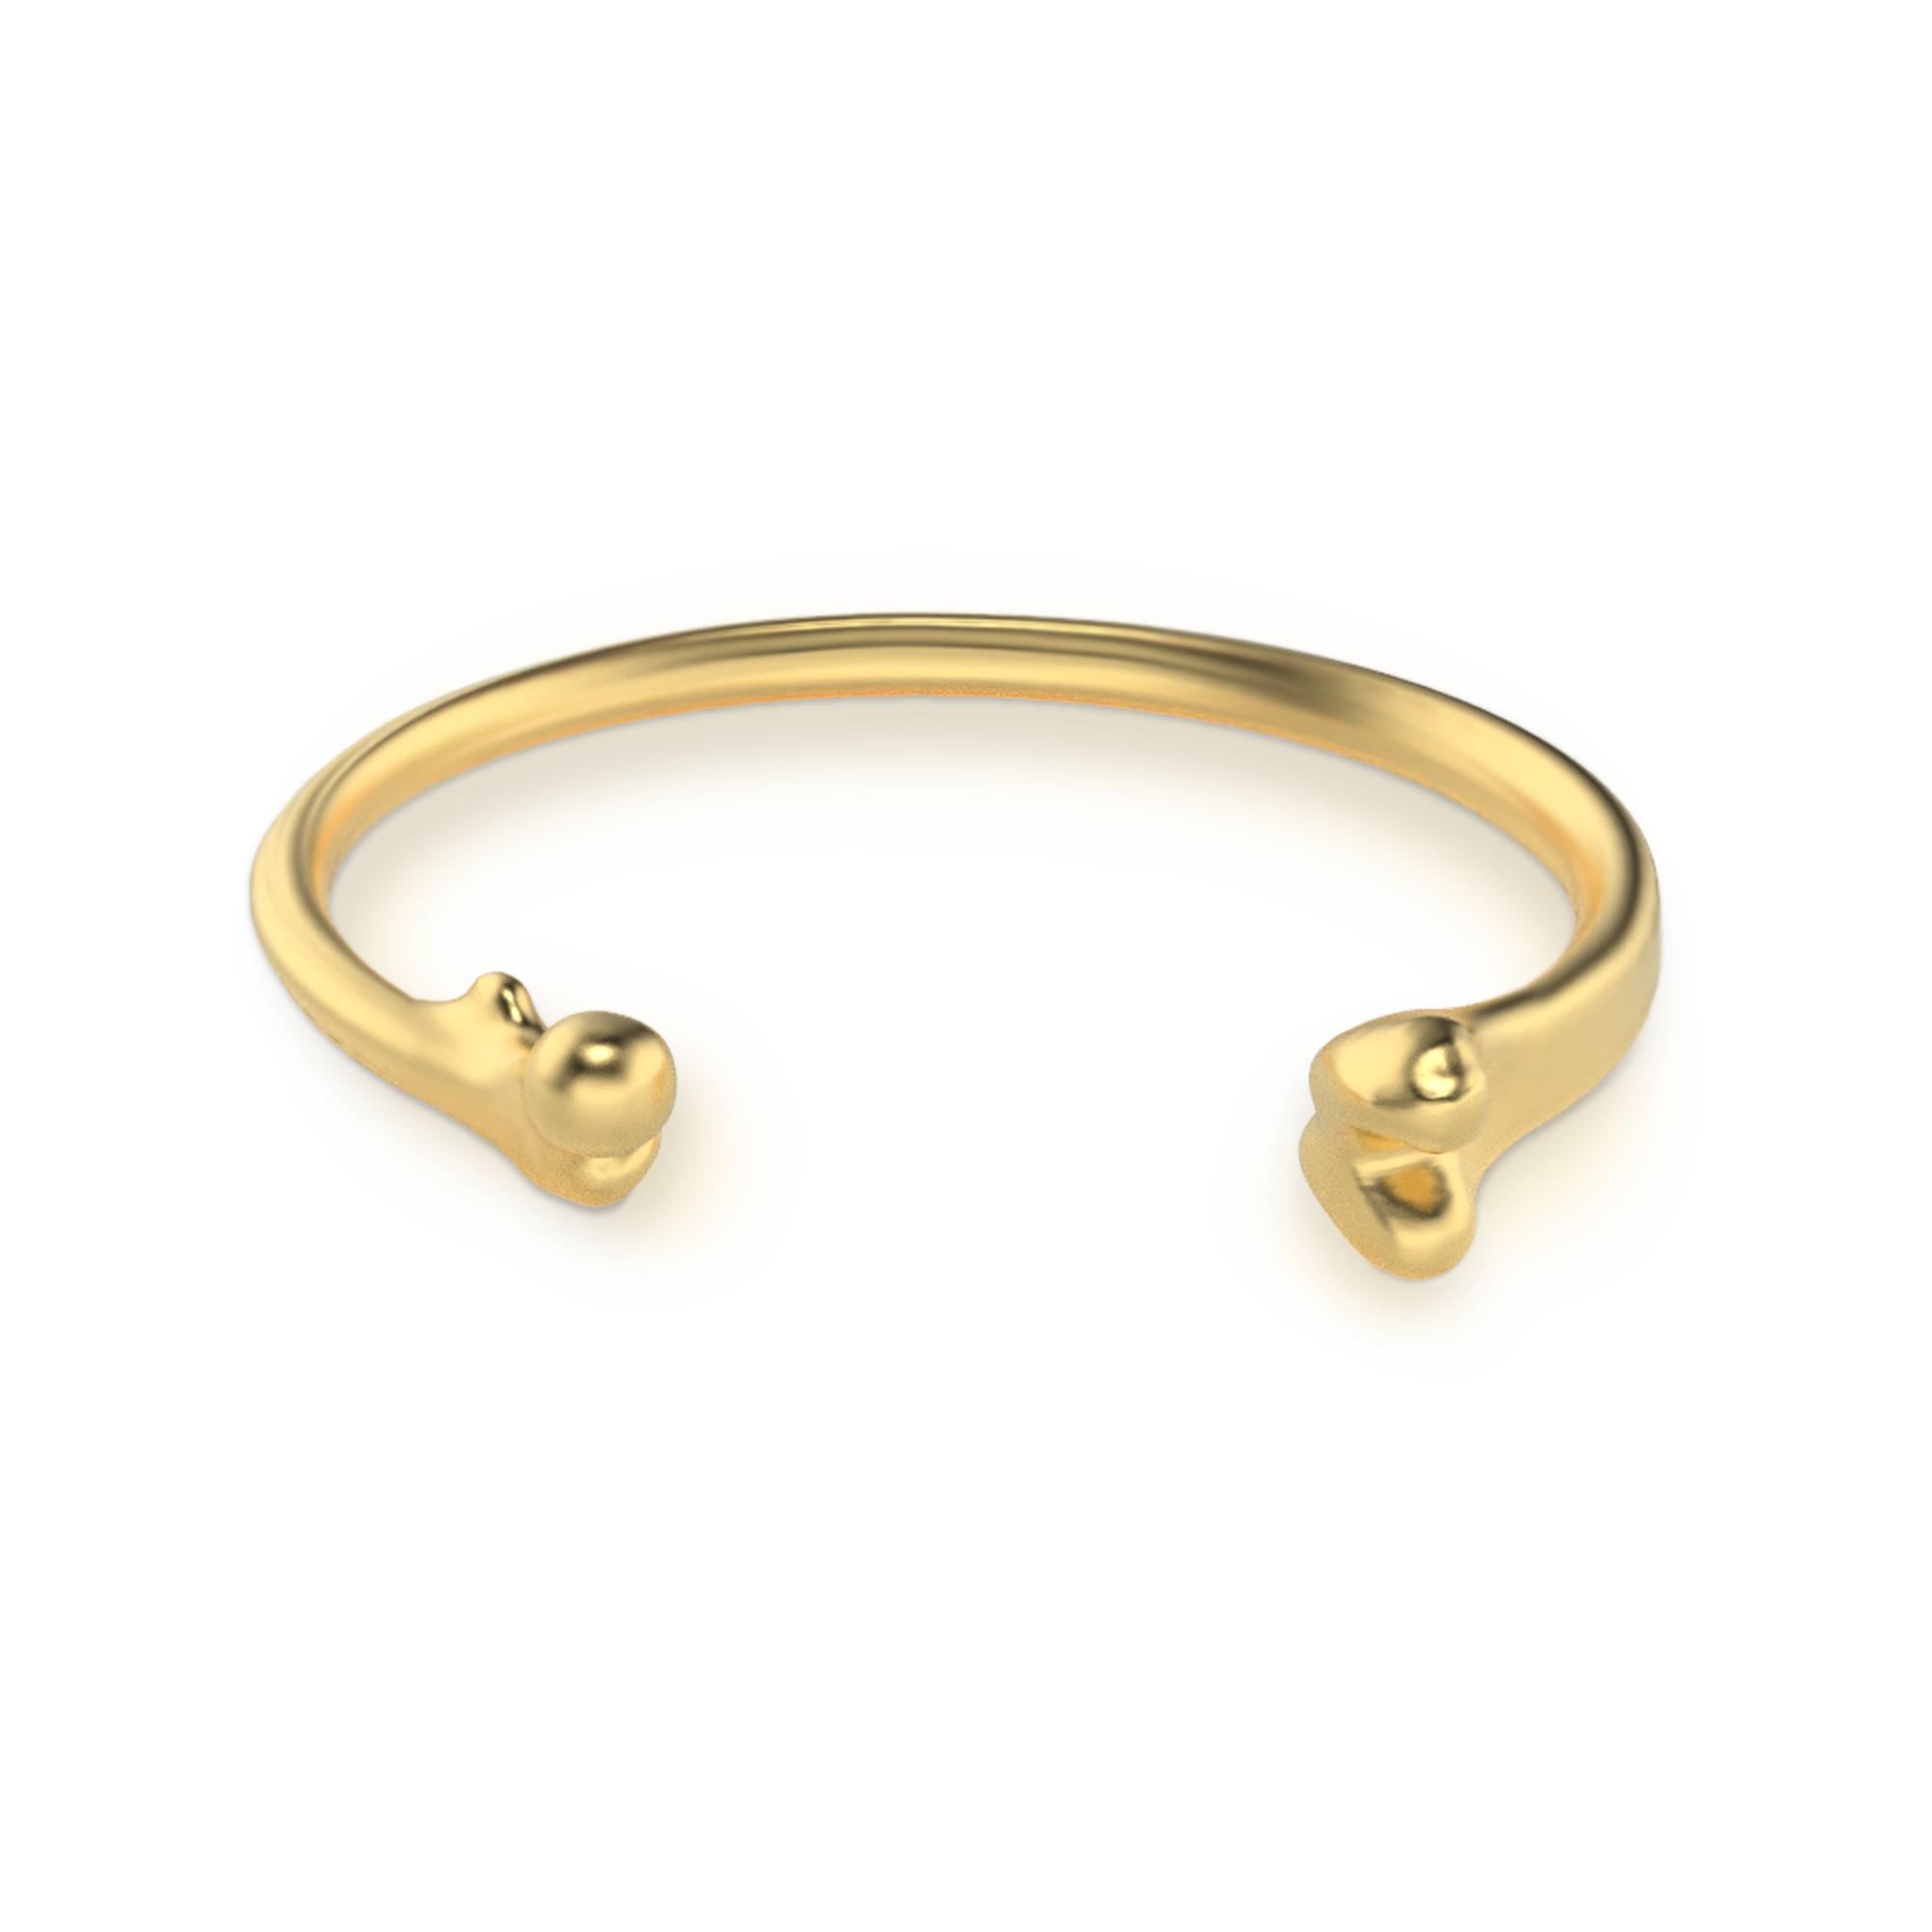 brazalete hueso dorado- golden bone cuff